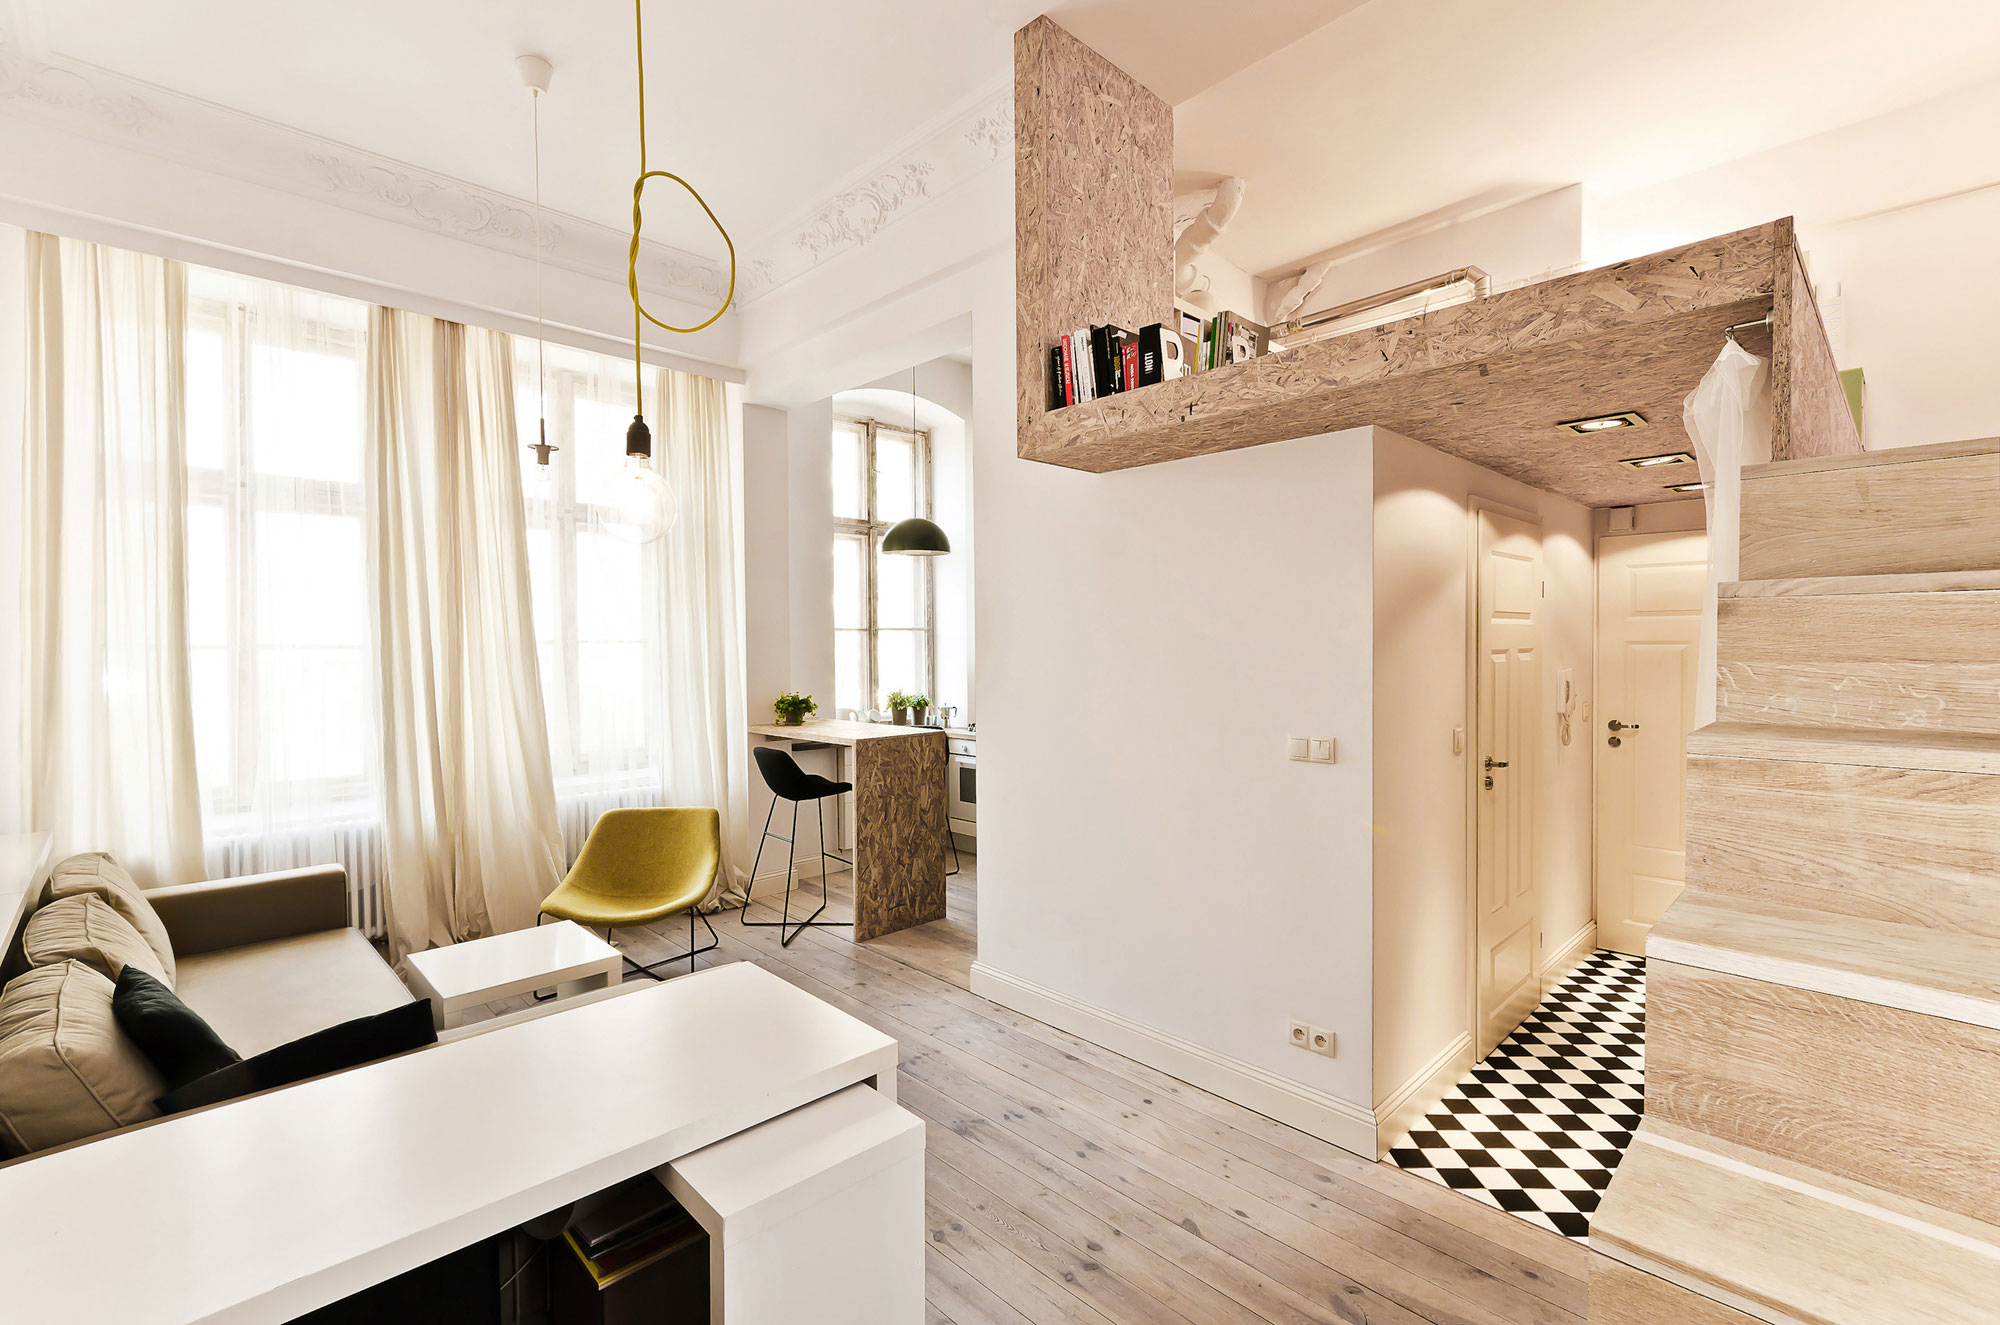 apartment-living-room-astounding-small-narrow-living-room-design-ideas-narrow-living-room-design-ideas-narrow-living-room-design-tips-small-narrow-living-room-design-ideas-living-room-design-